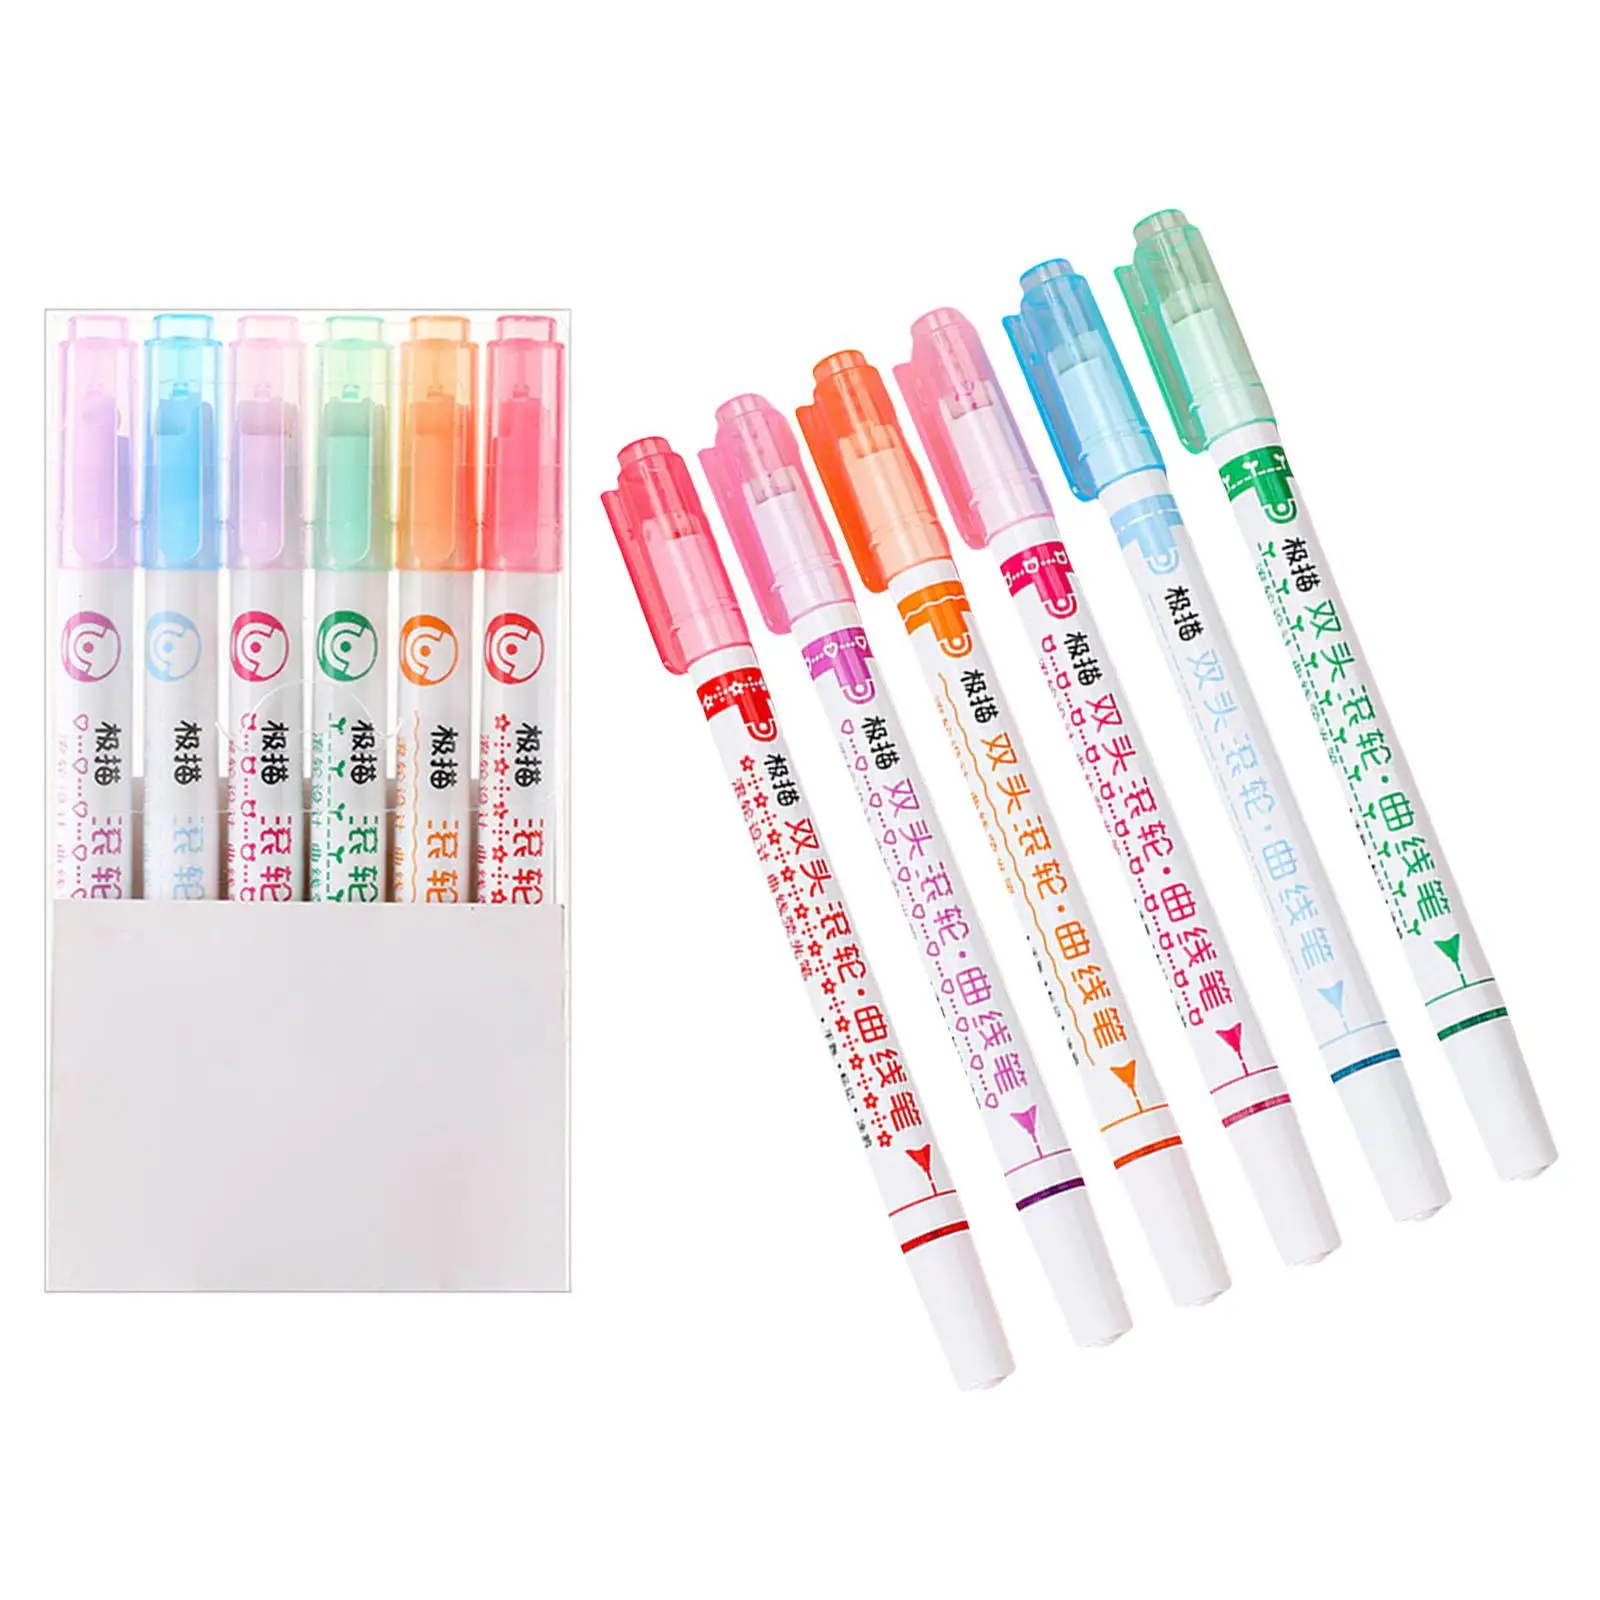 6 Pieces flower dots Line Shaped Highlighter Pen Different Colors Marker pen Office Journaling Scrapbook Drawing Marker